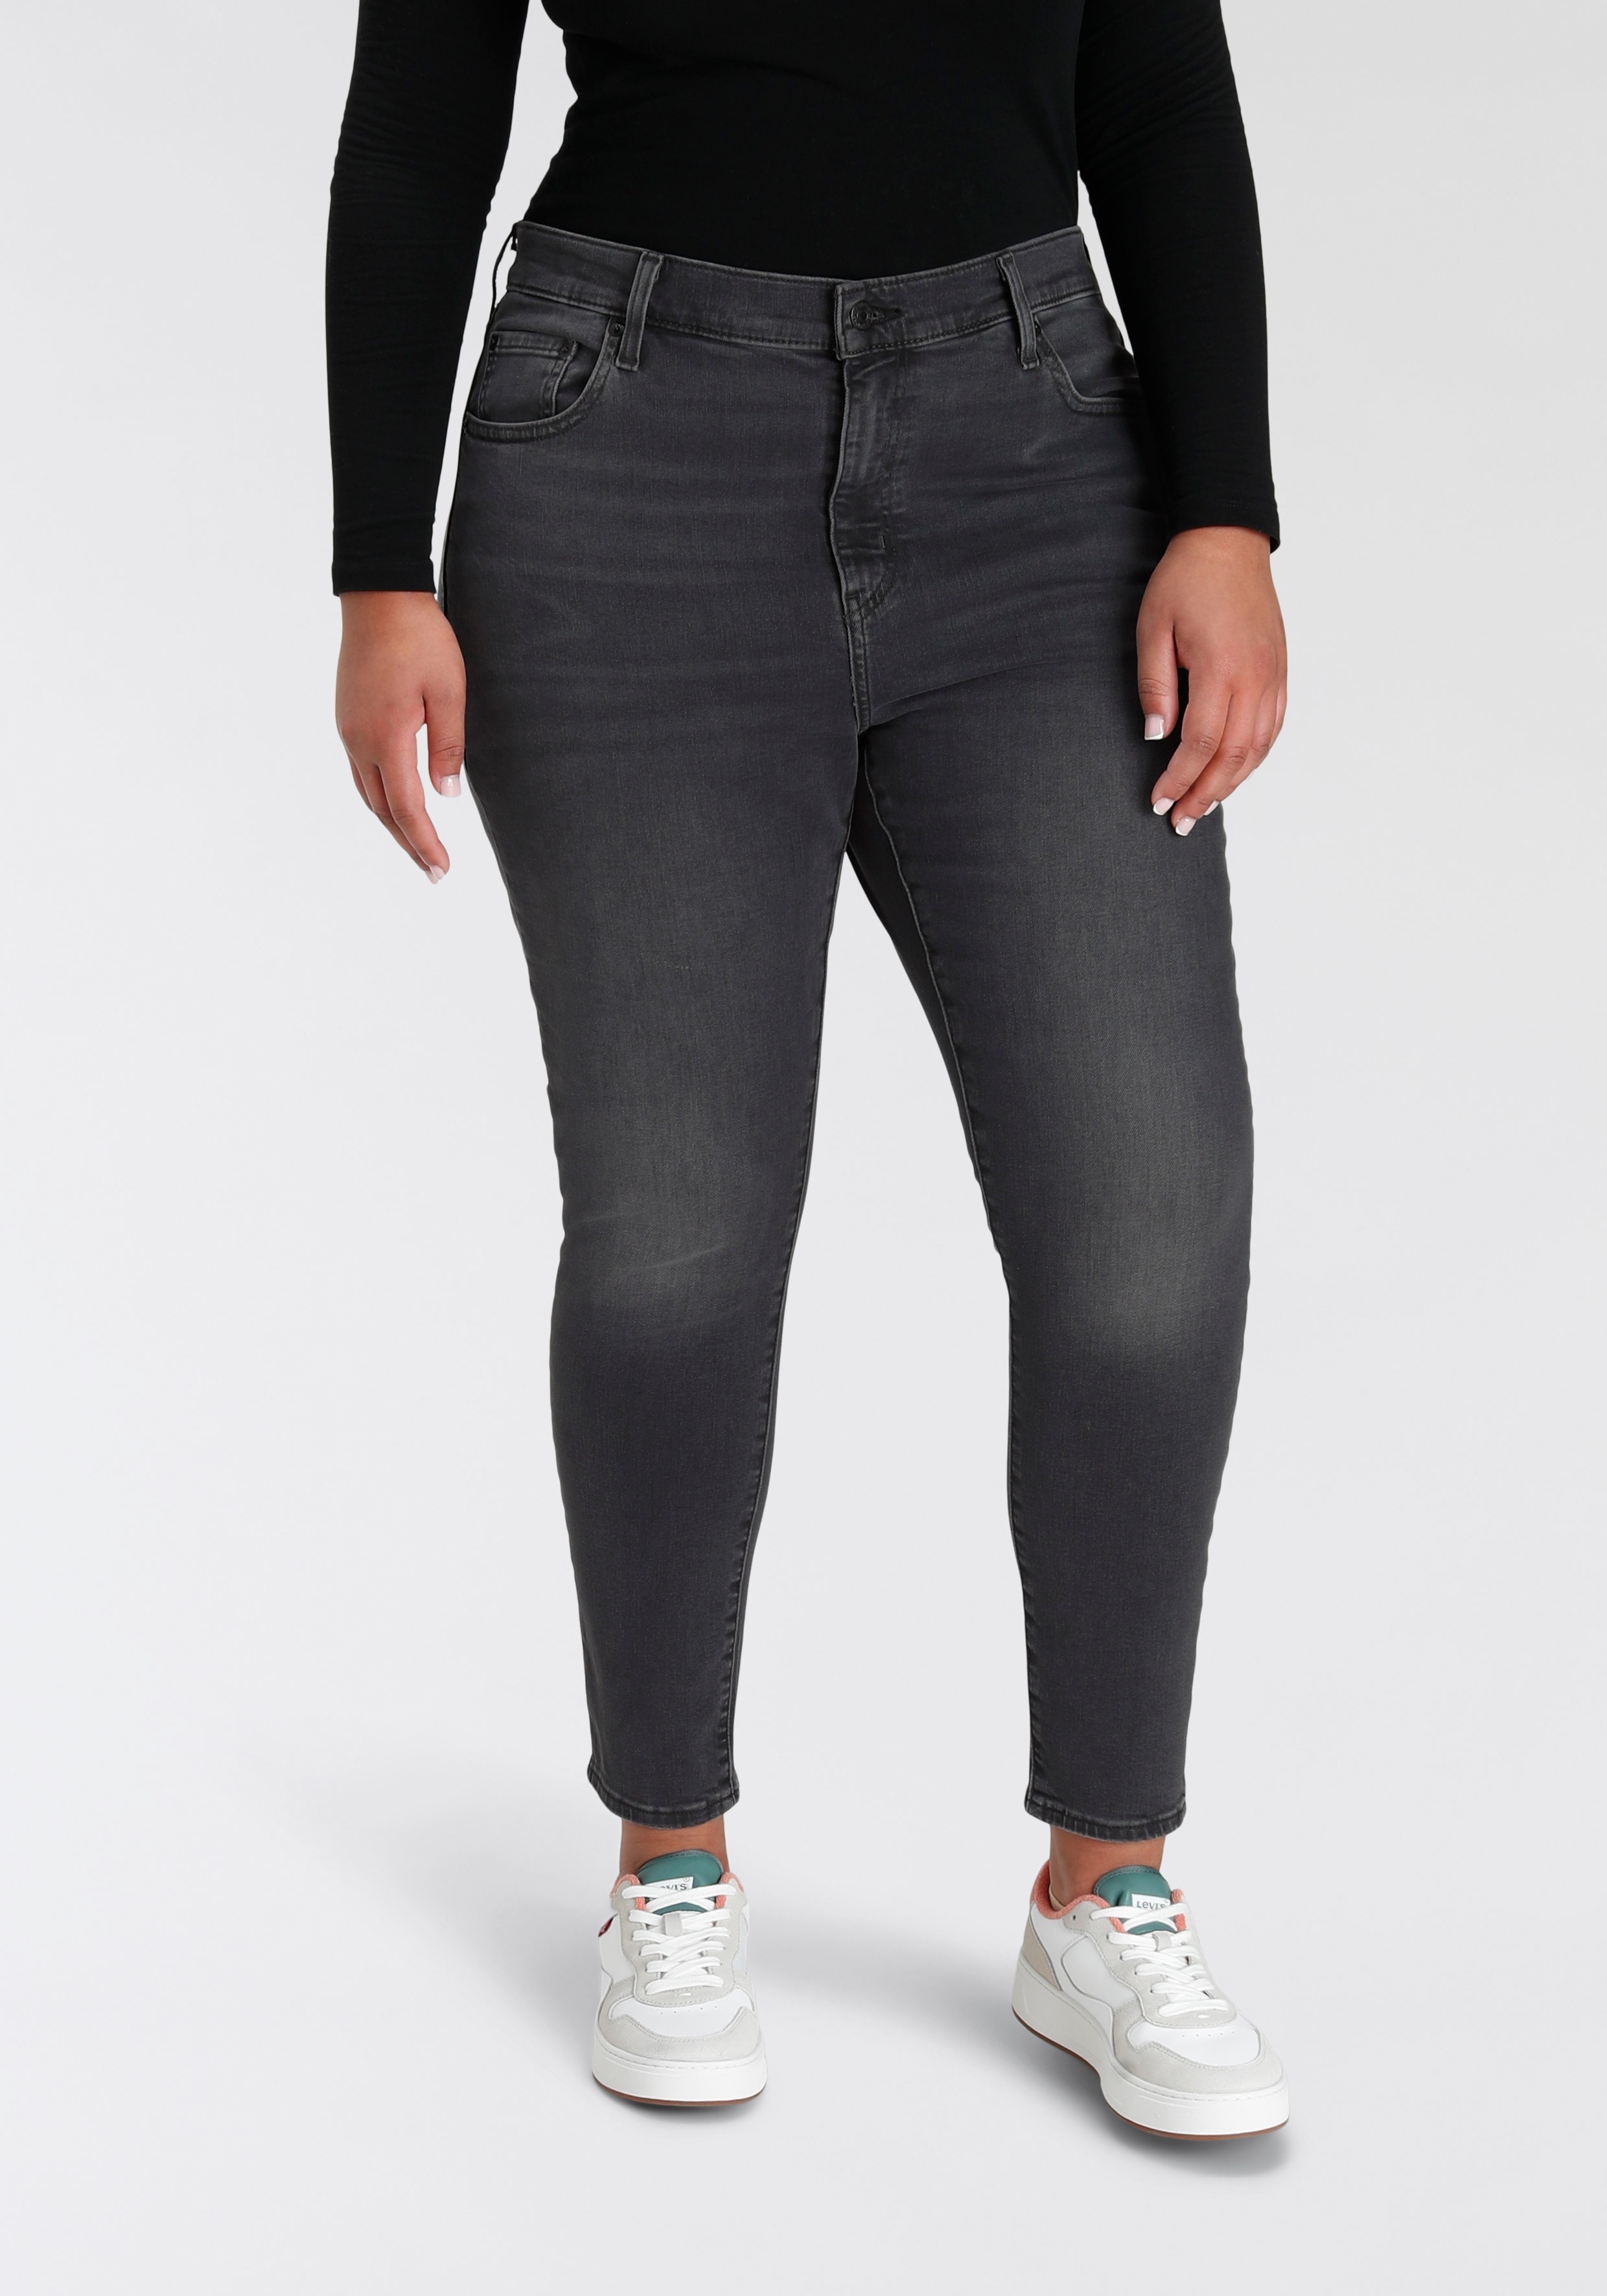 Skinny-fit-Jeans LEVI'S PLUS "721 PL HI RISE SKINNY" Gr. 22 (52), Länge 30, schwarz (black) Damen Jeans Röhrenjeans